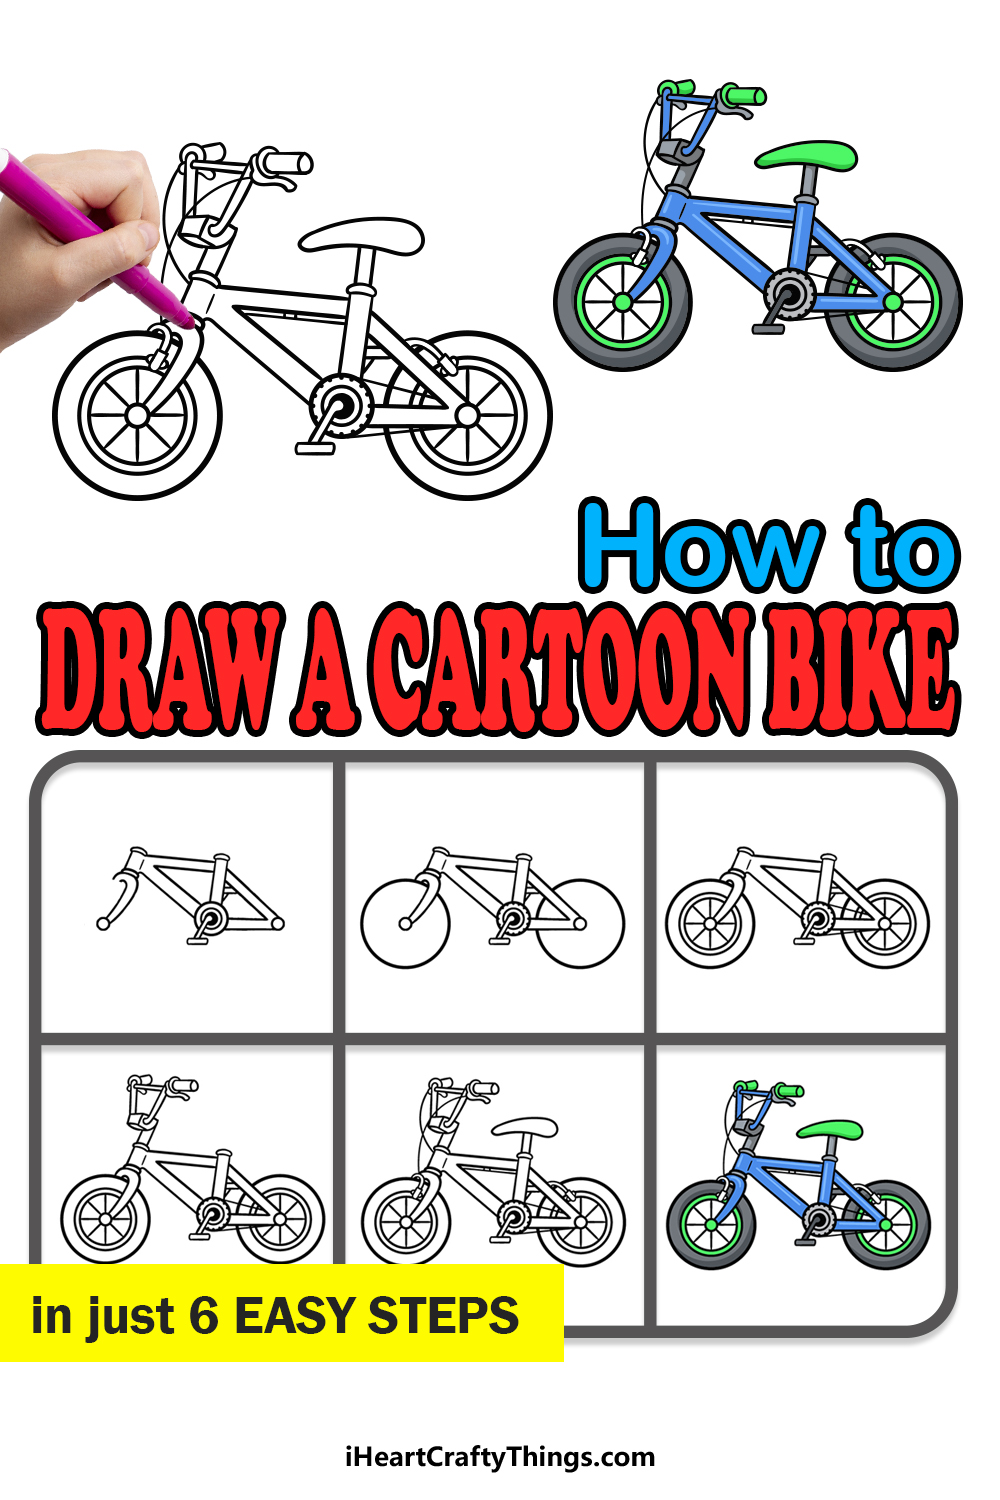 Cartoon Bike Drawing - How To Draw A Cartoon Bike Step By Step